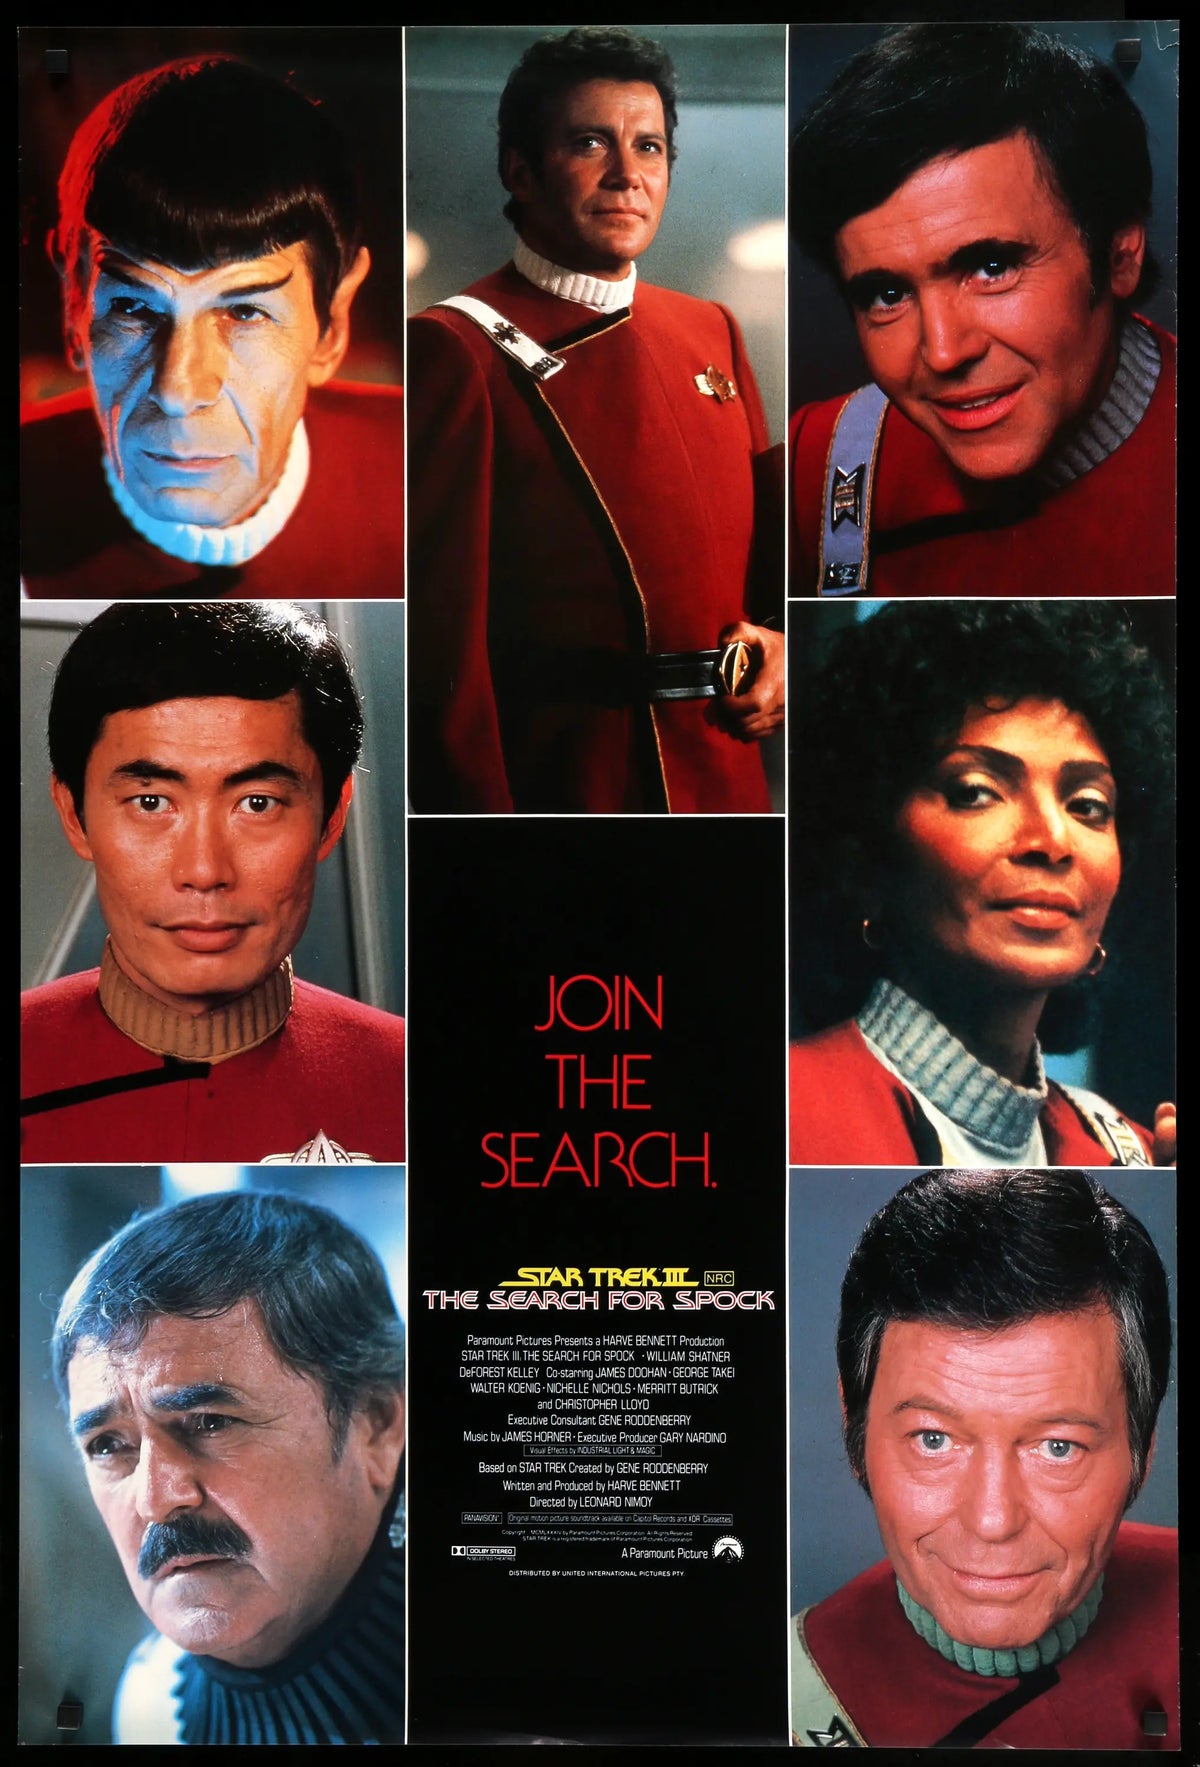 Star Trek III: The Search for Spock (1984) original movie poster for sale at Original Film Art